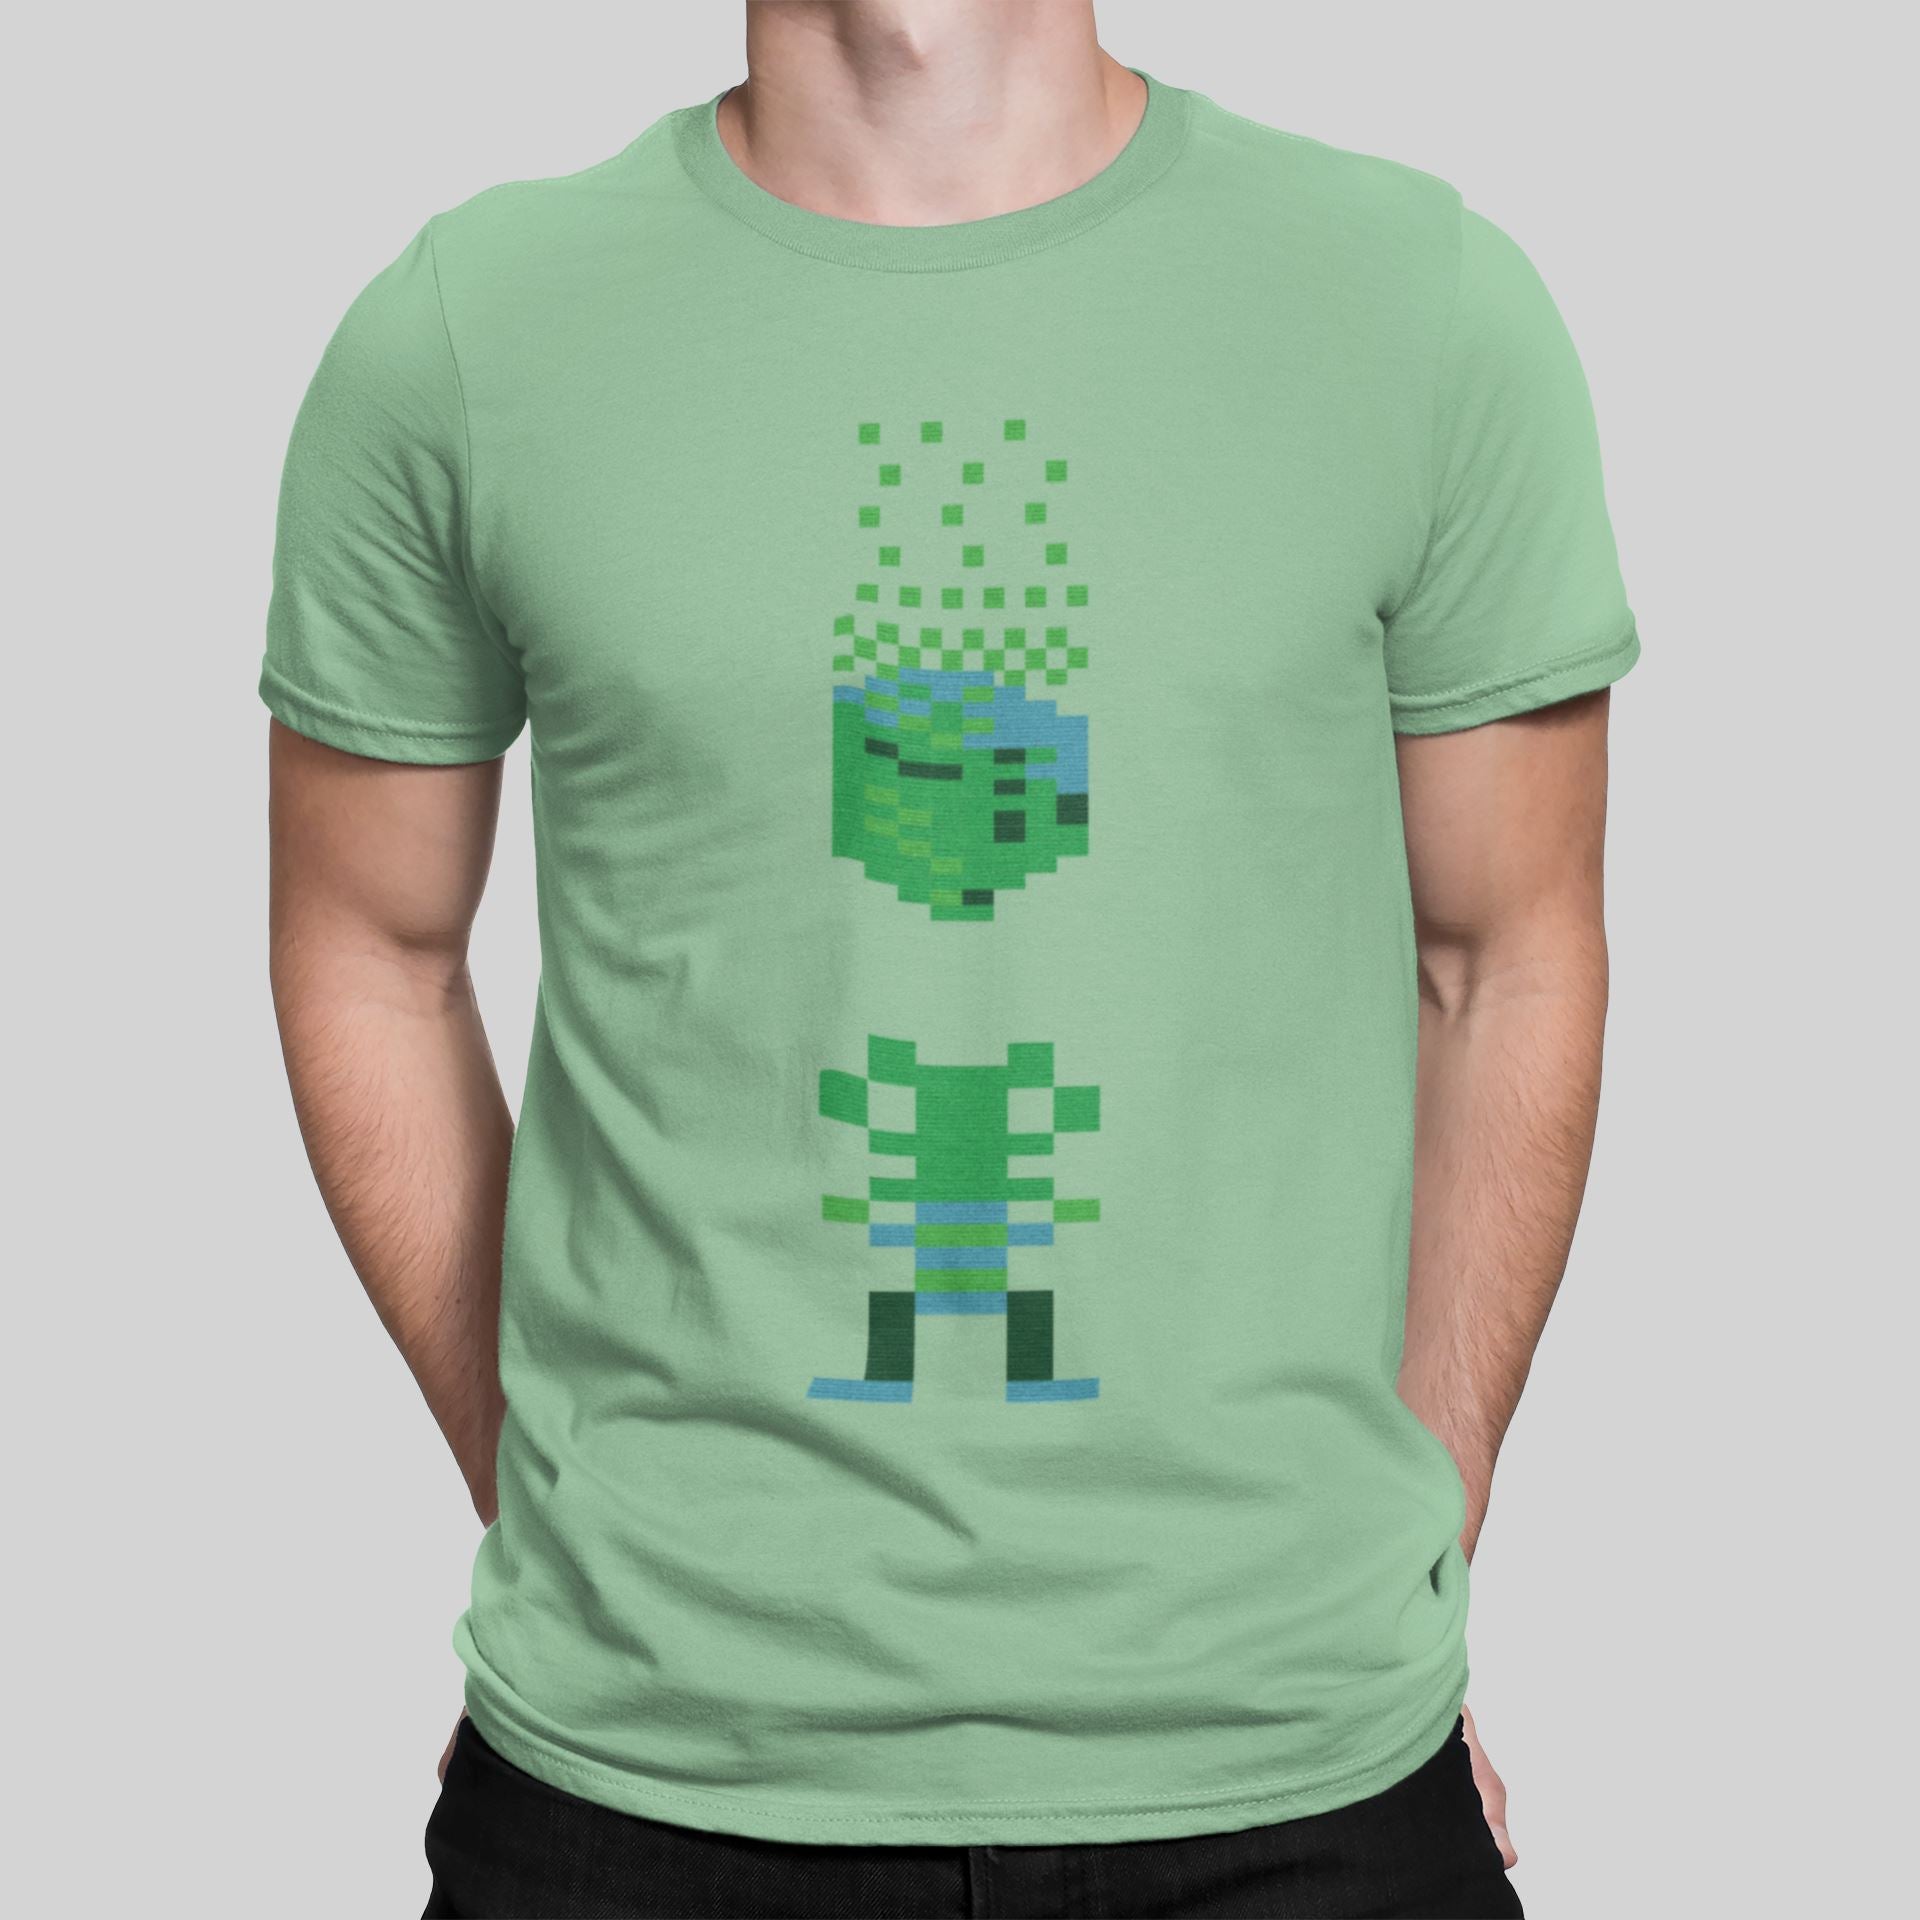 Boulder Dash Drop Retro Gaming T-Shirt T-Shirt Seven Squared Small 34-36" Light Green 